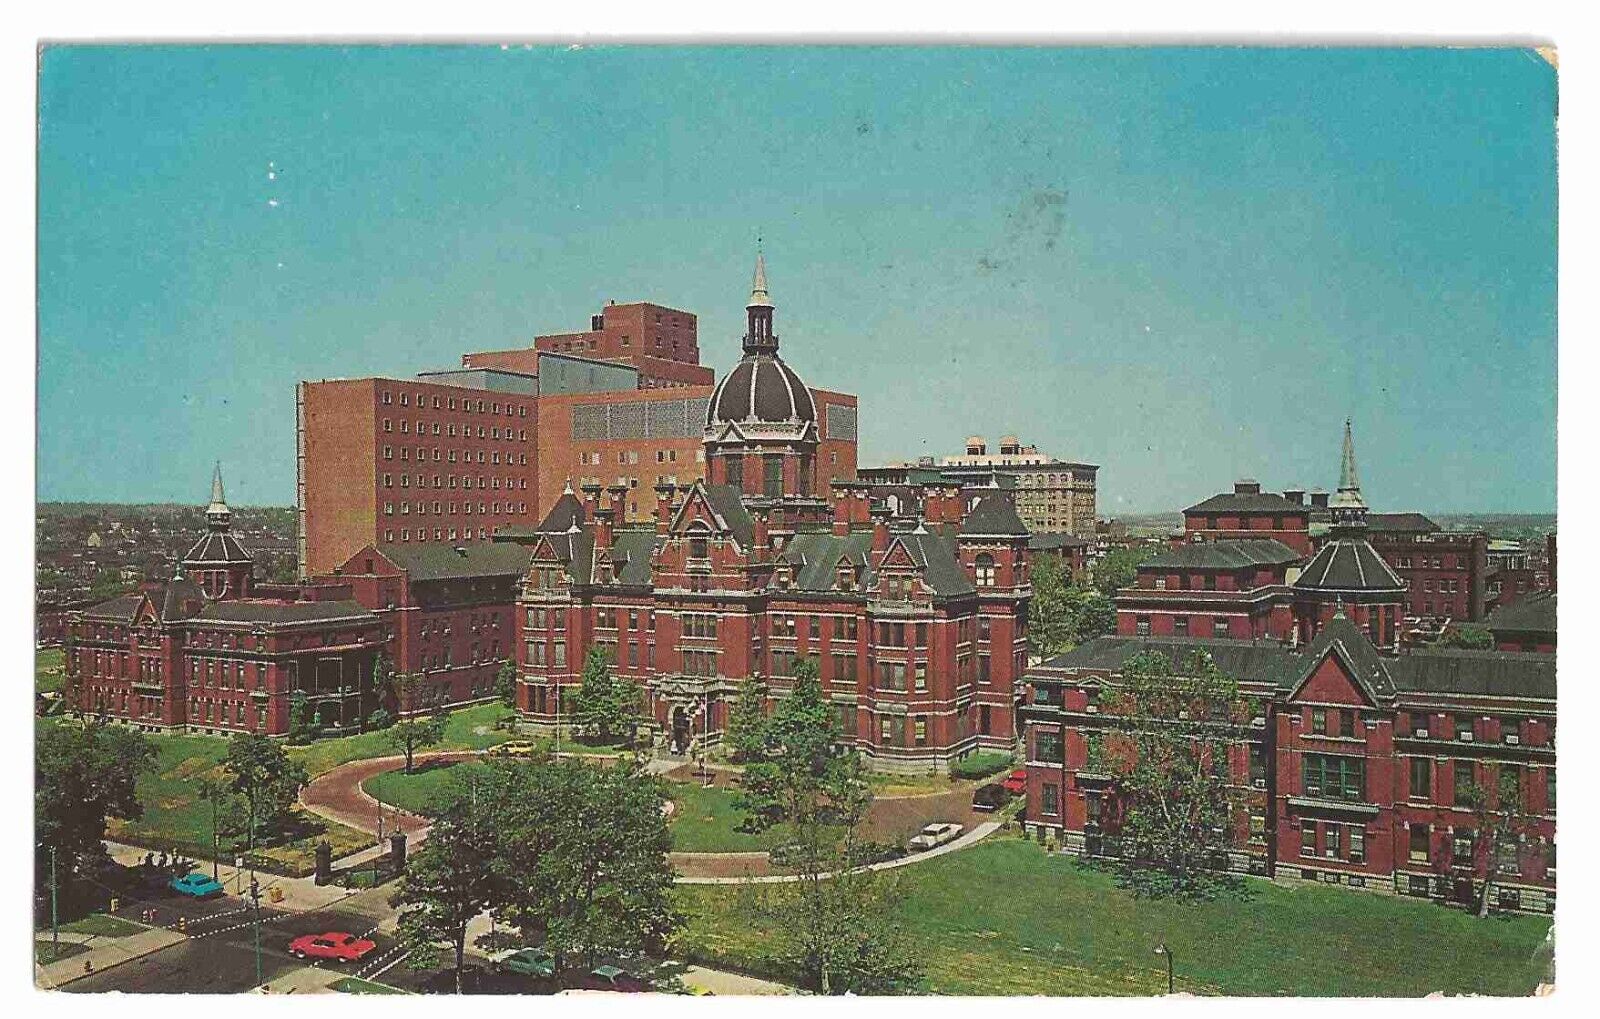 Vintage Postcard: The Johns Hopkins Hospital - Baltimore, Maryland